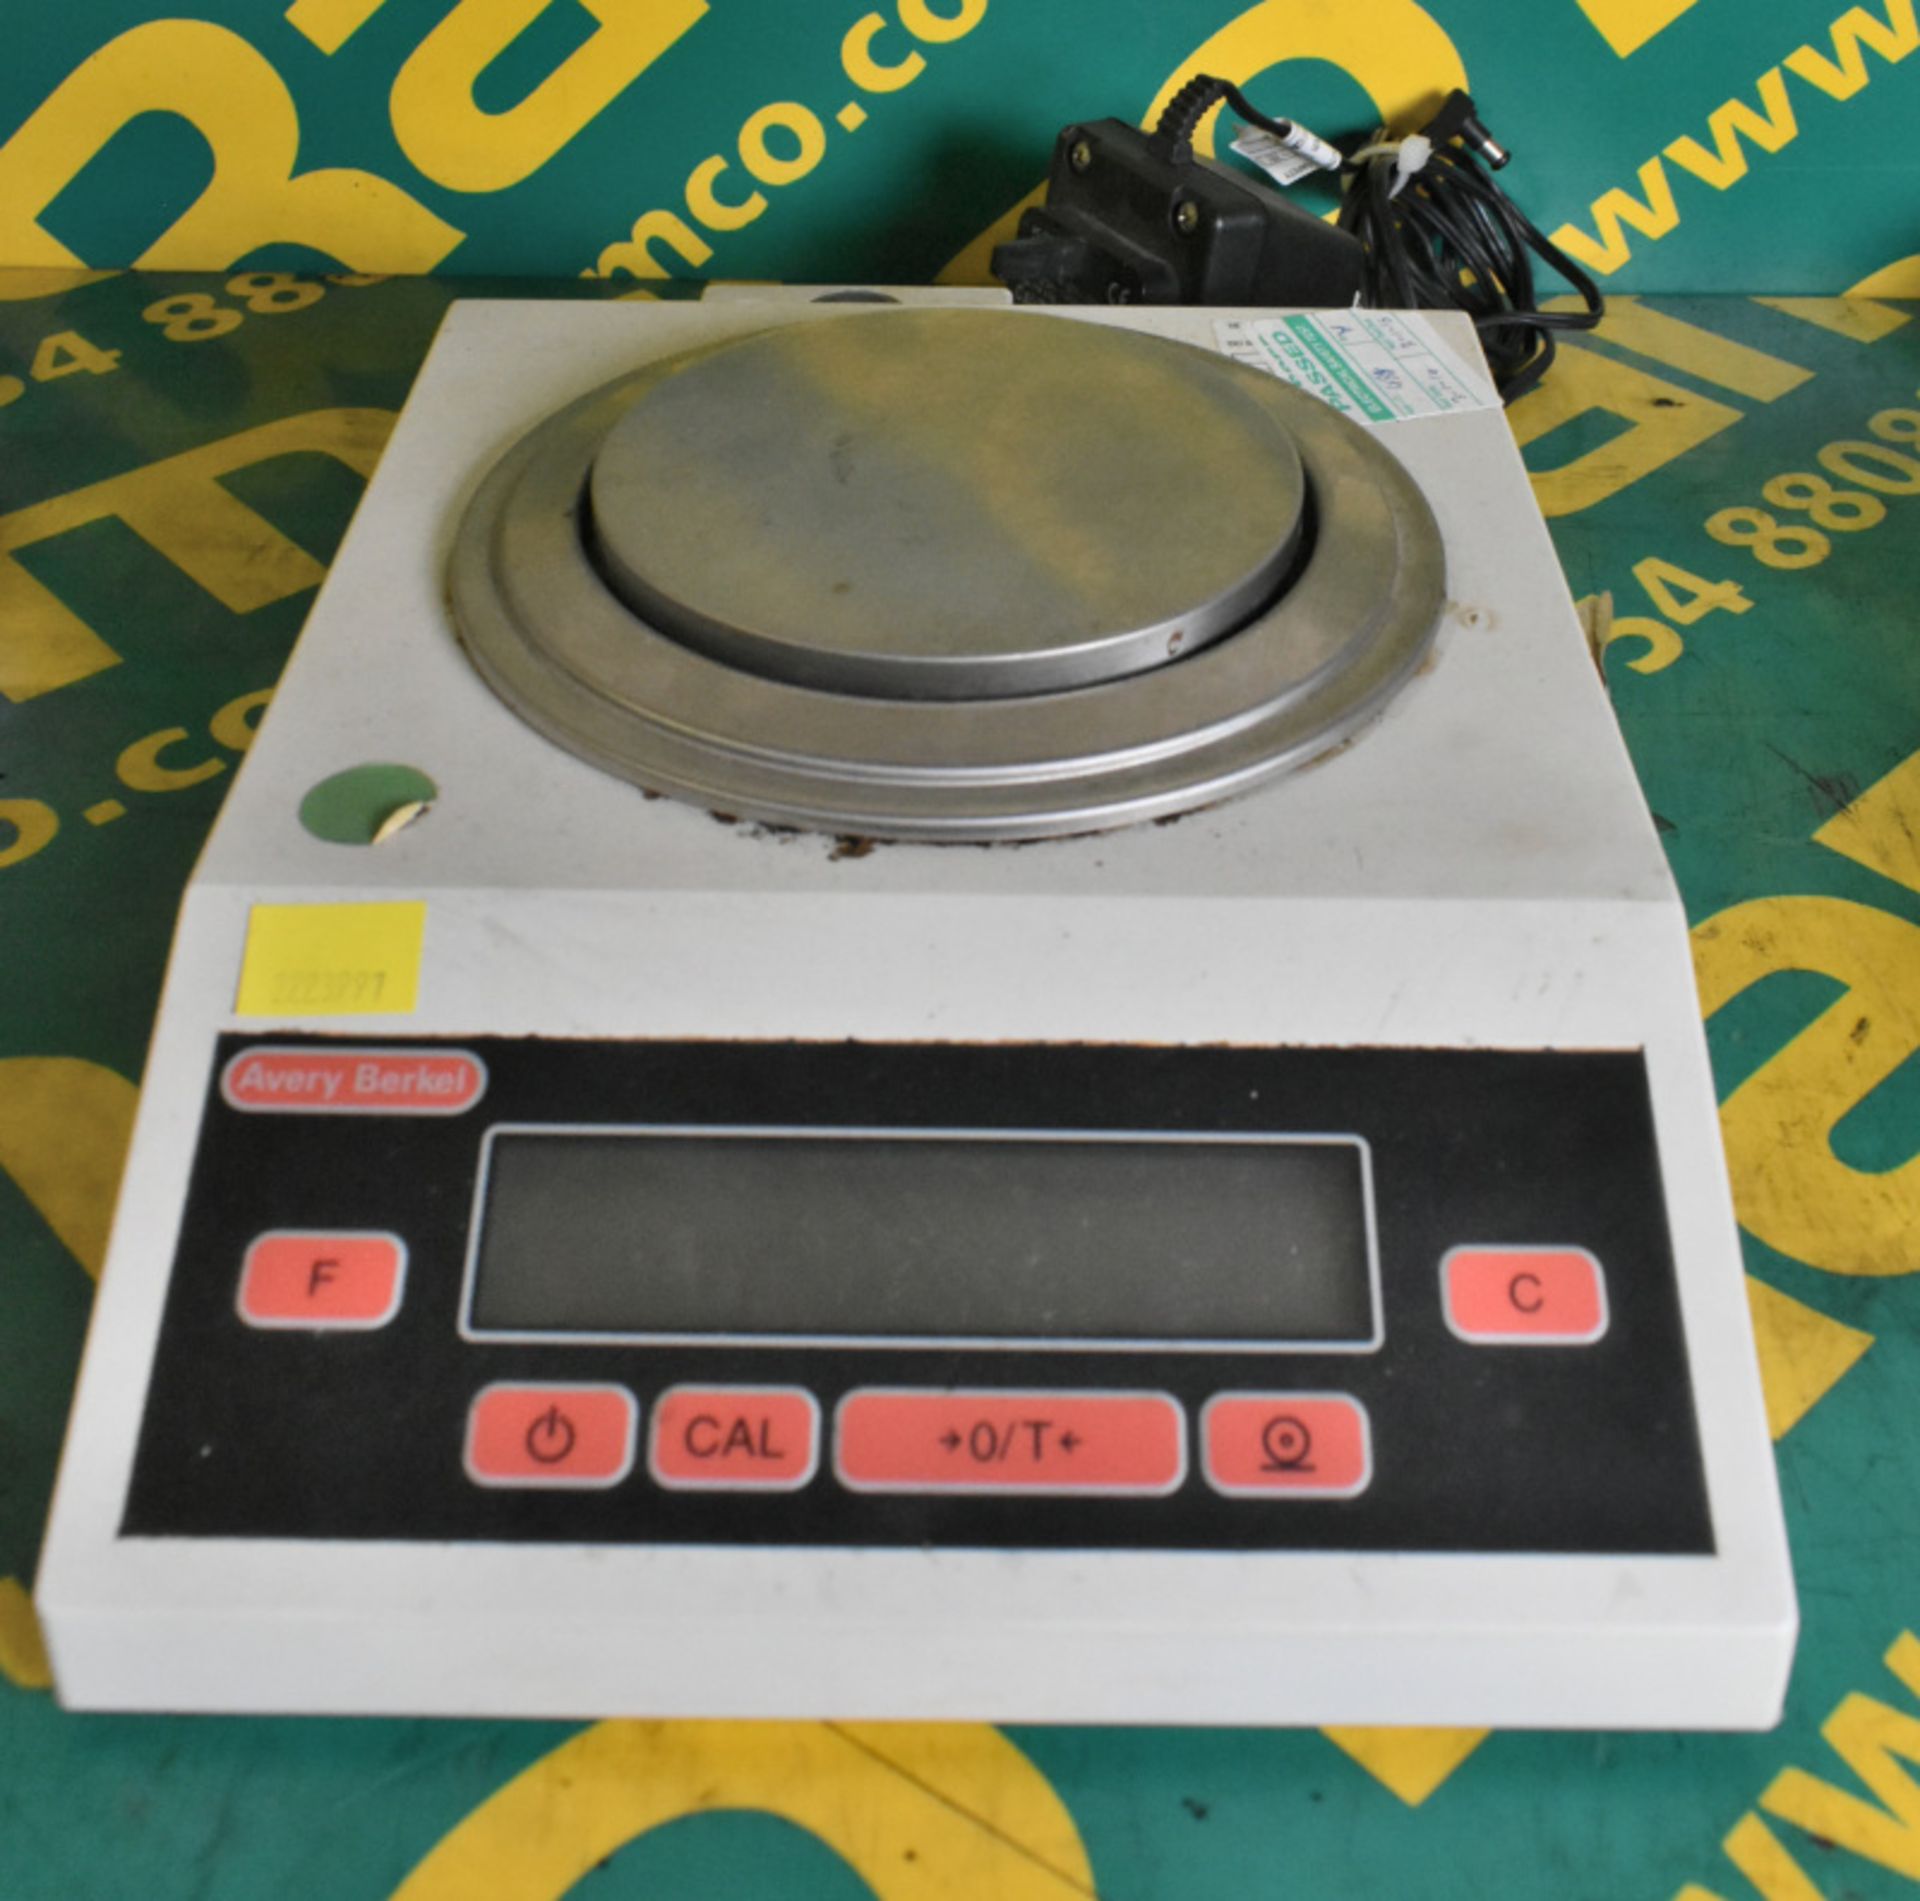 Avery Berkel FA612 Digital Electronic Weighing Scales max 160g